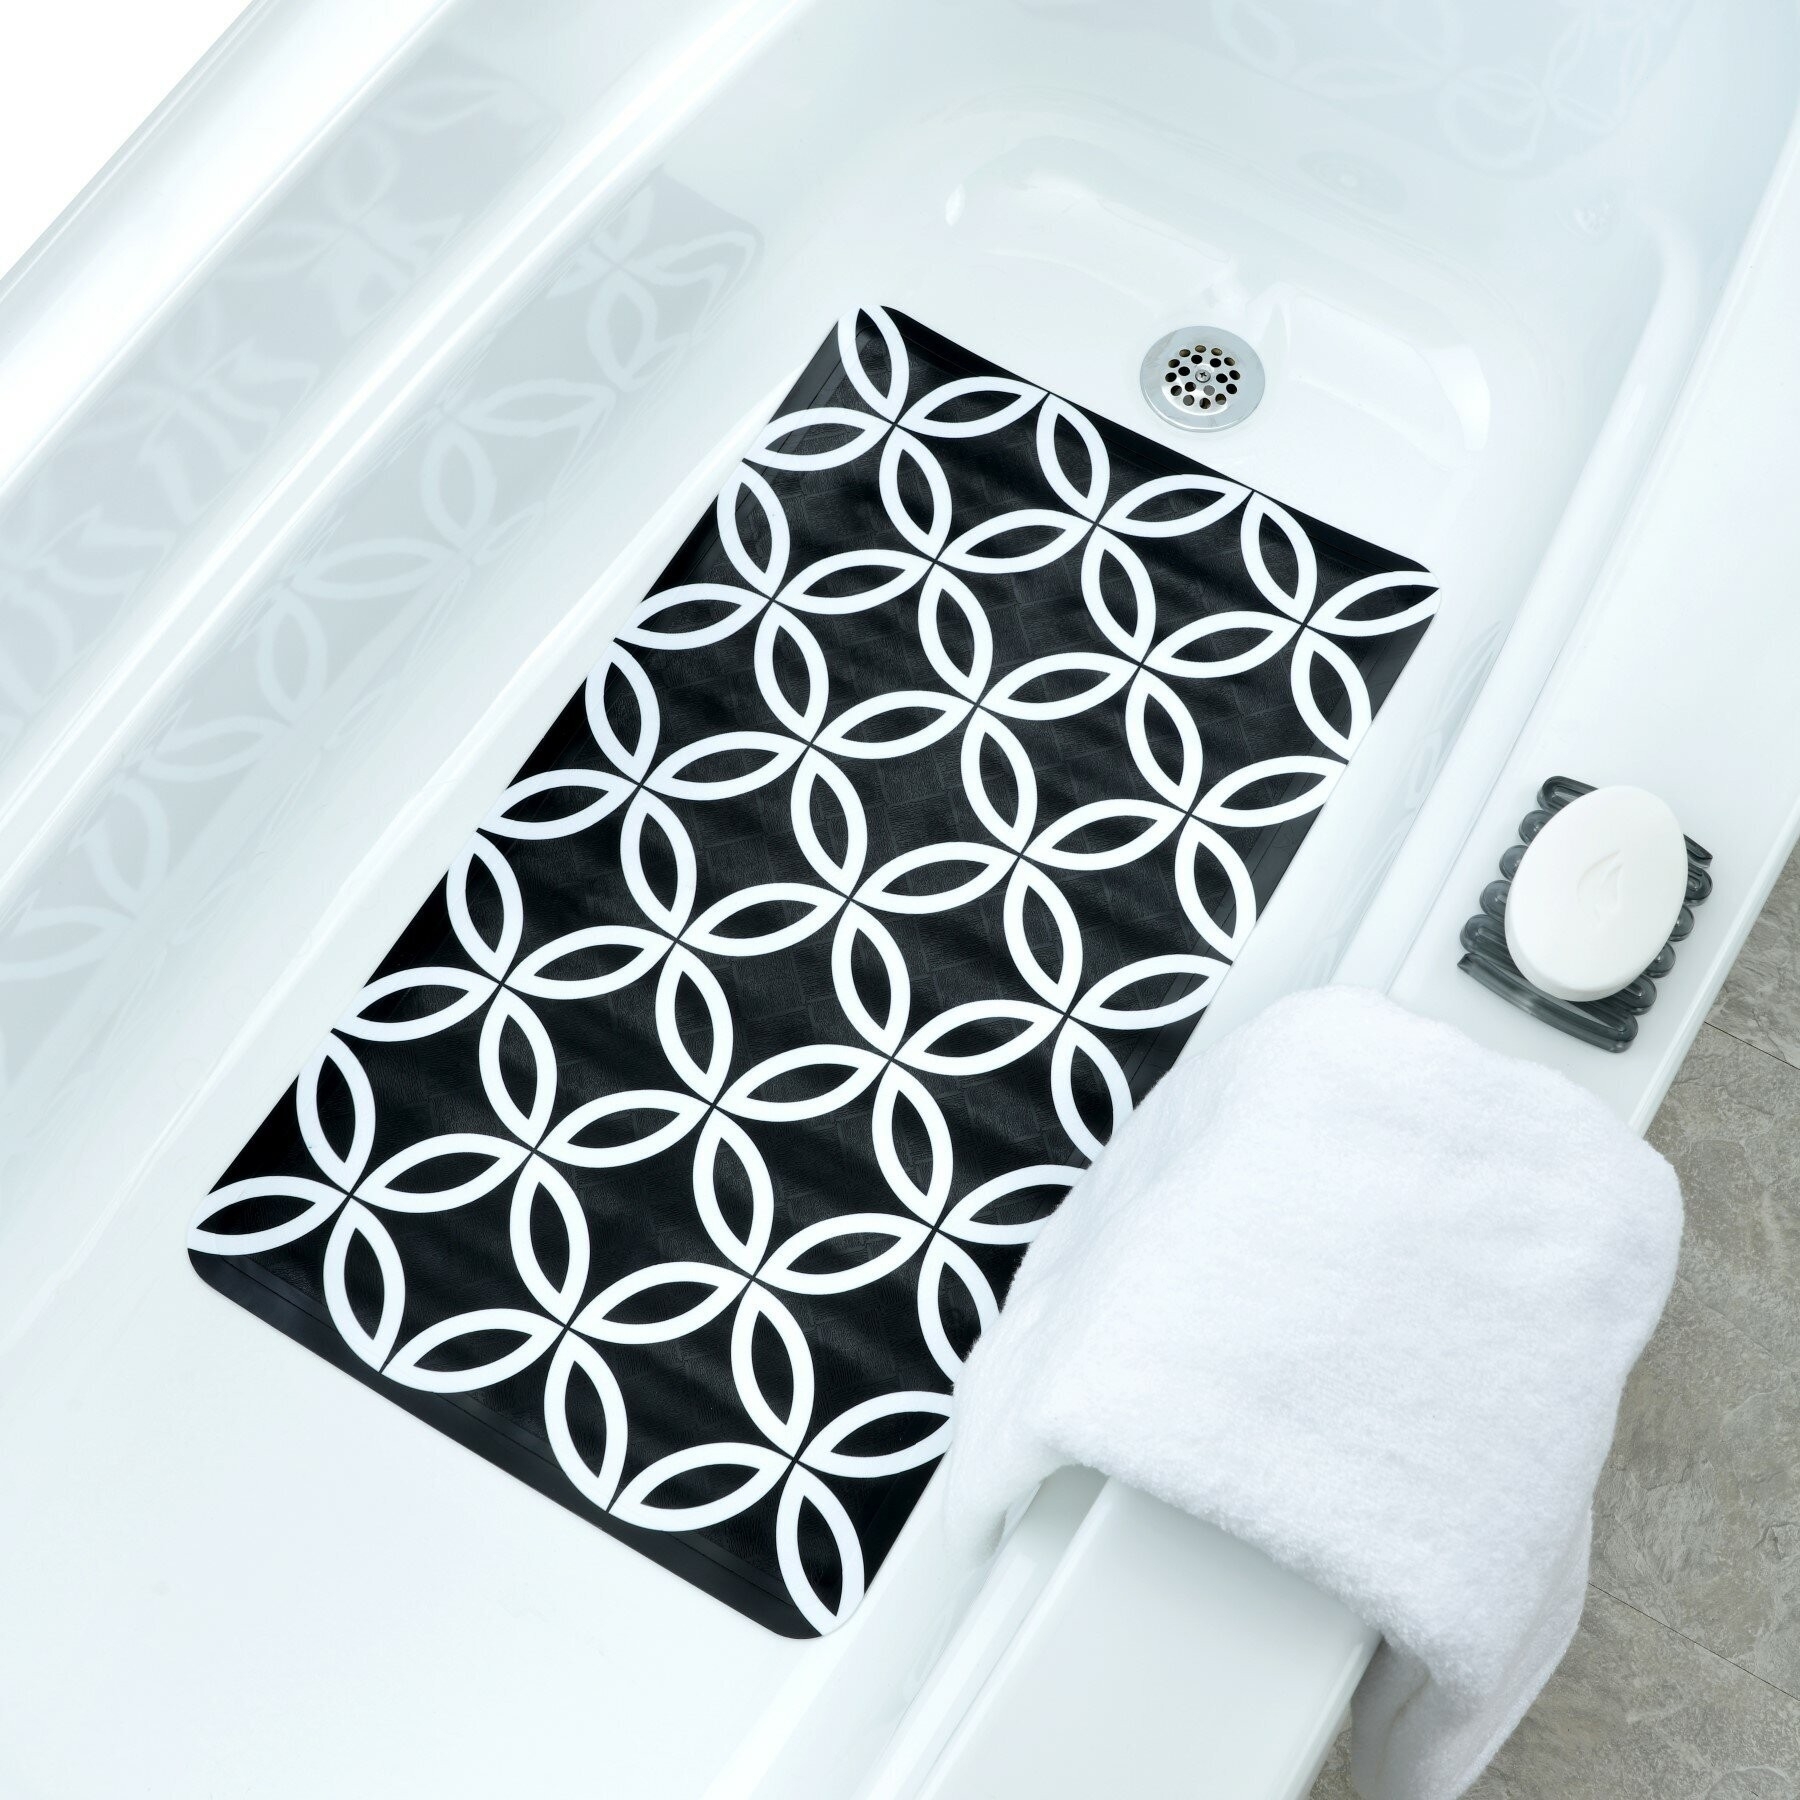 black shower mat